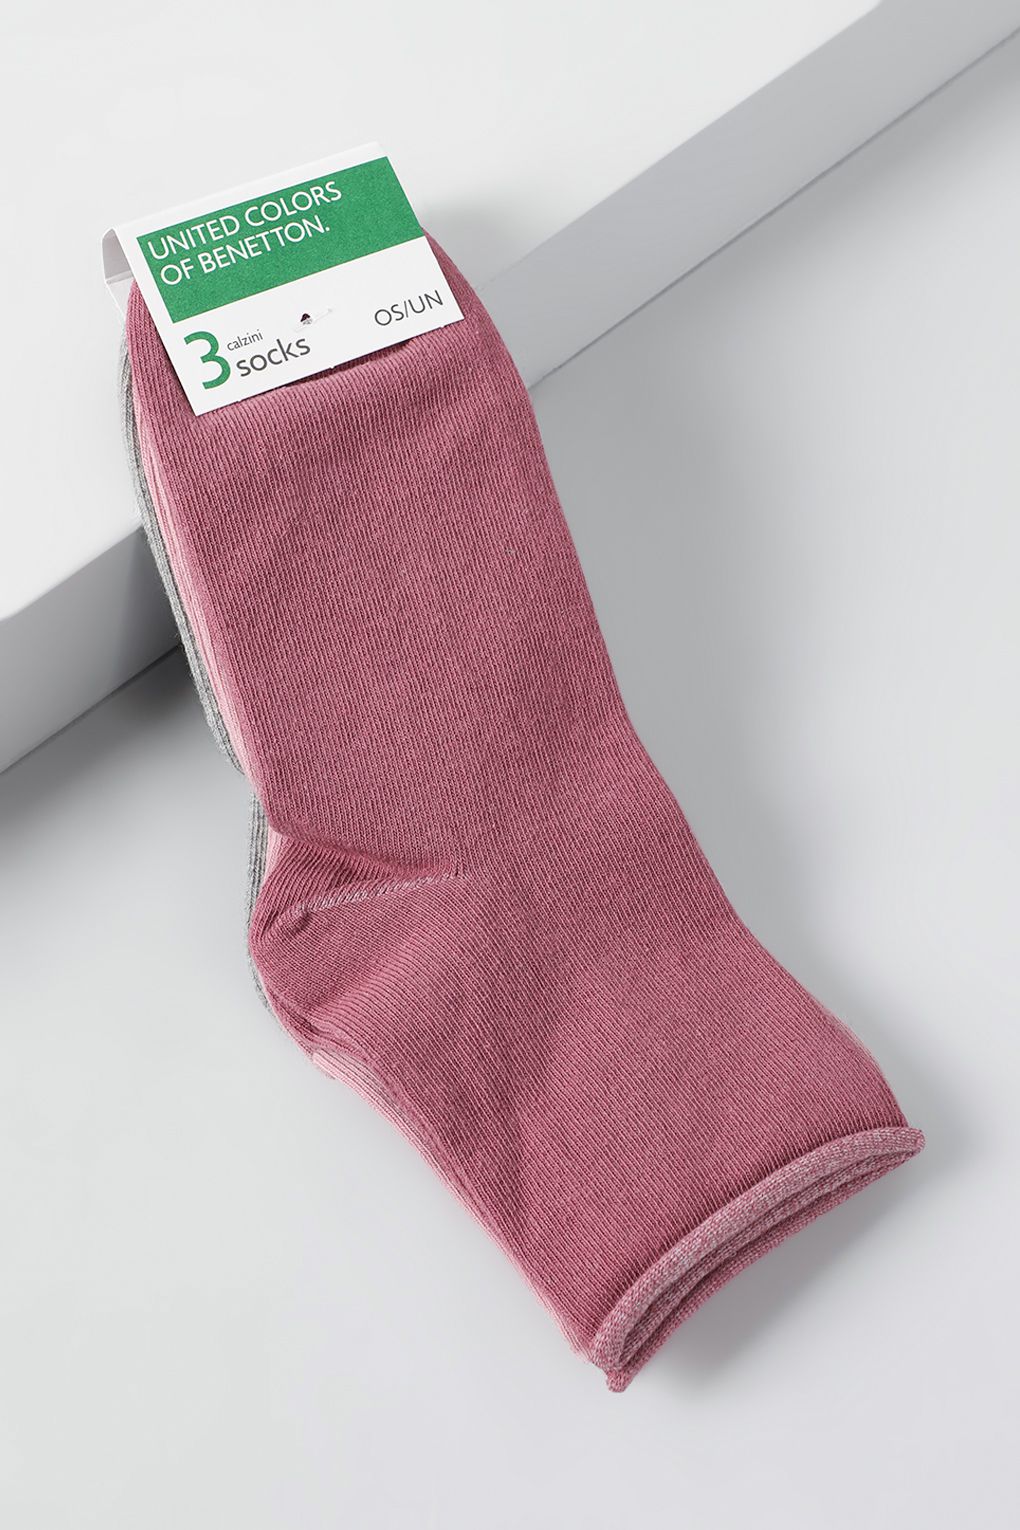 Комплект носков женских Benetton Undercolors 6AO3E2155 разноцветных one size